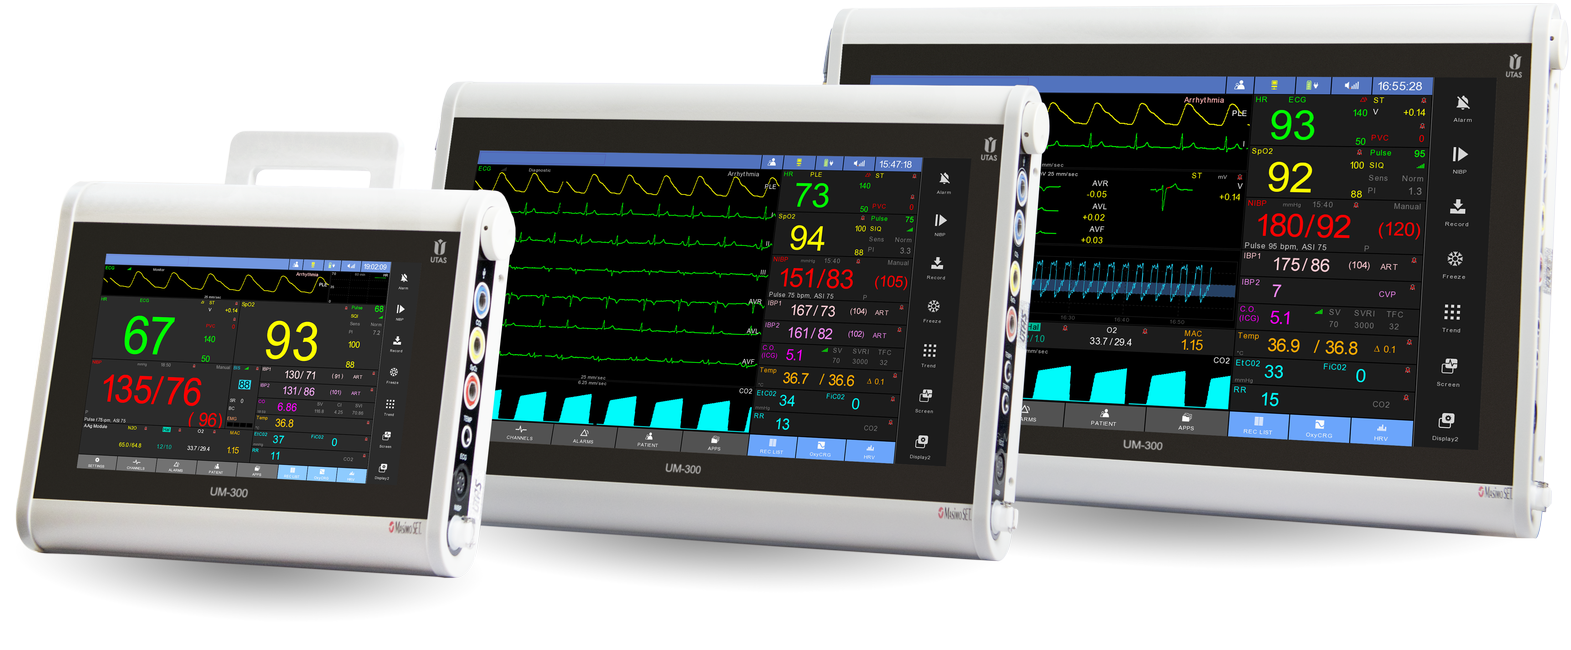 Patient monitors UM 300-S models